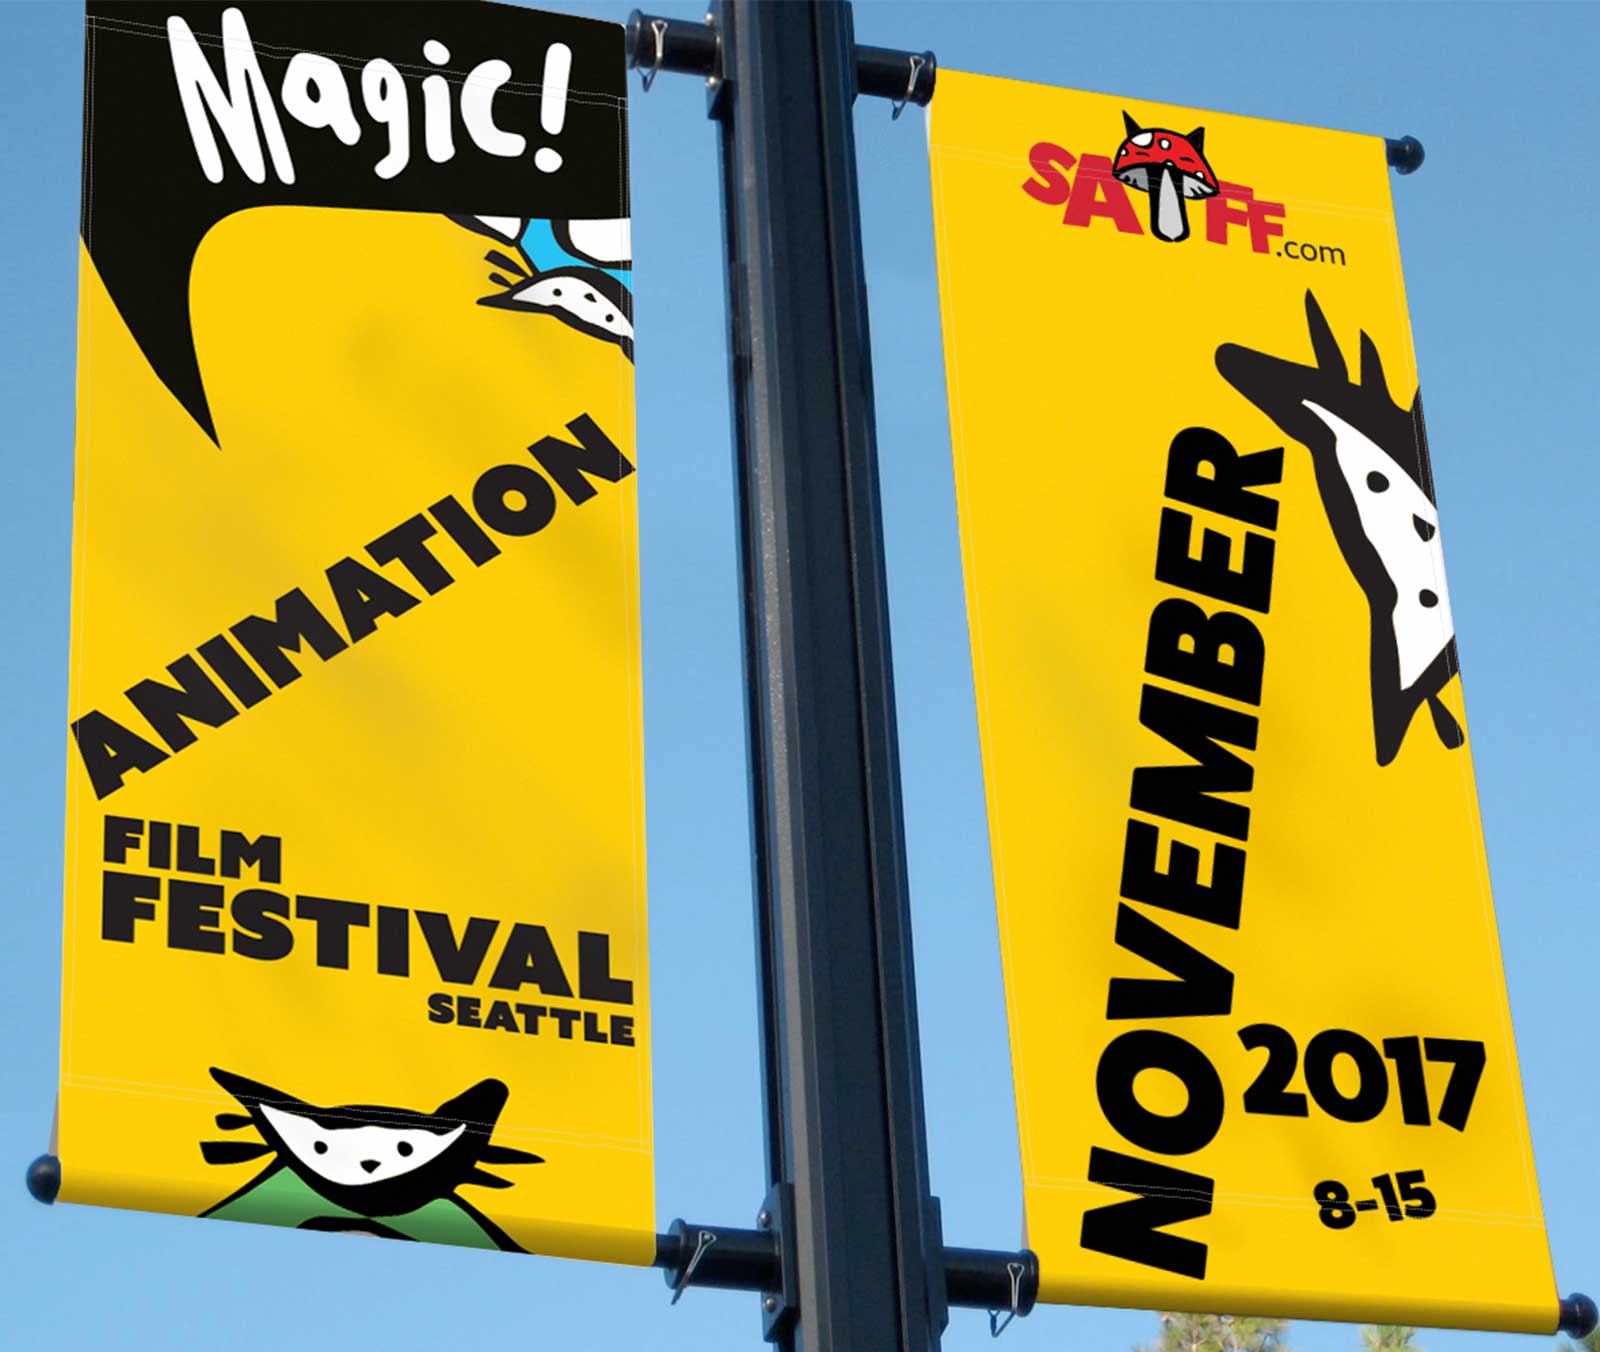 Seattle Animation Film Festival by Ambar de Kok-Mercado